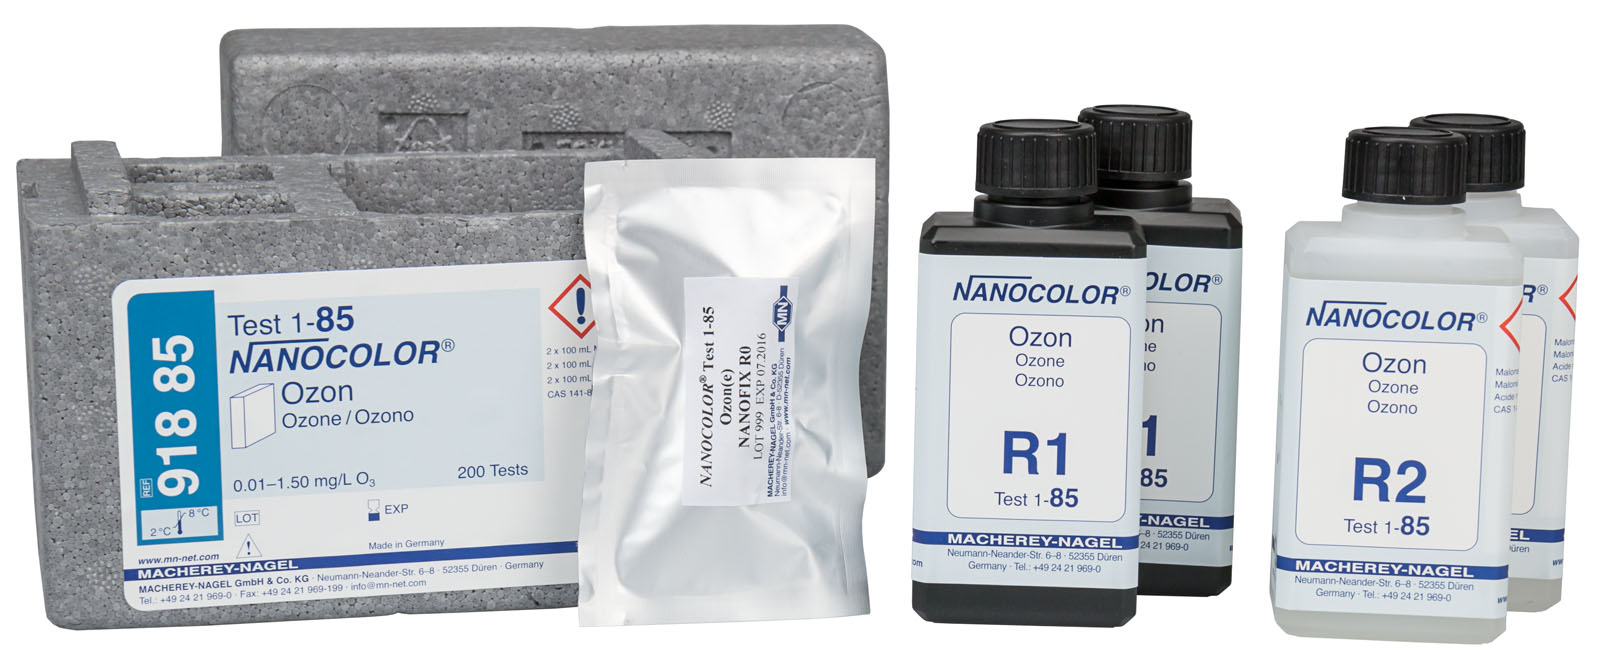 NANOCOLOR® Ozone Standard Test